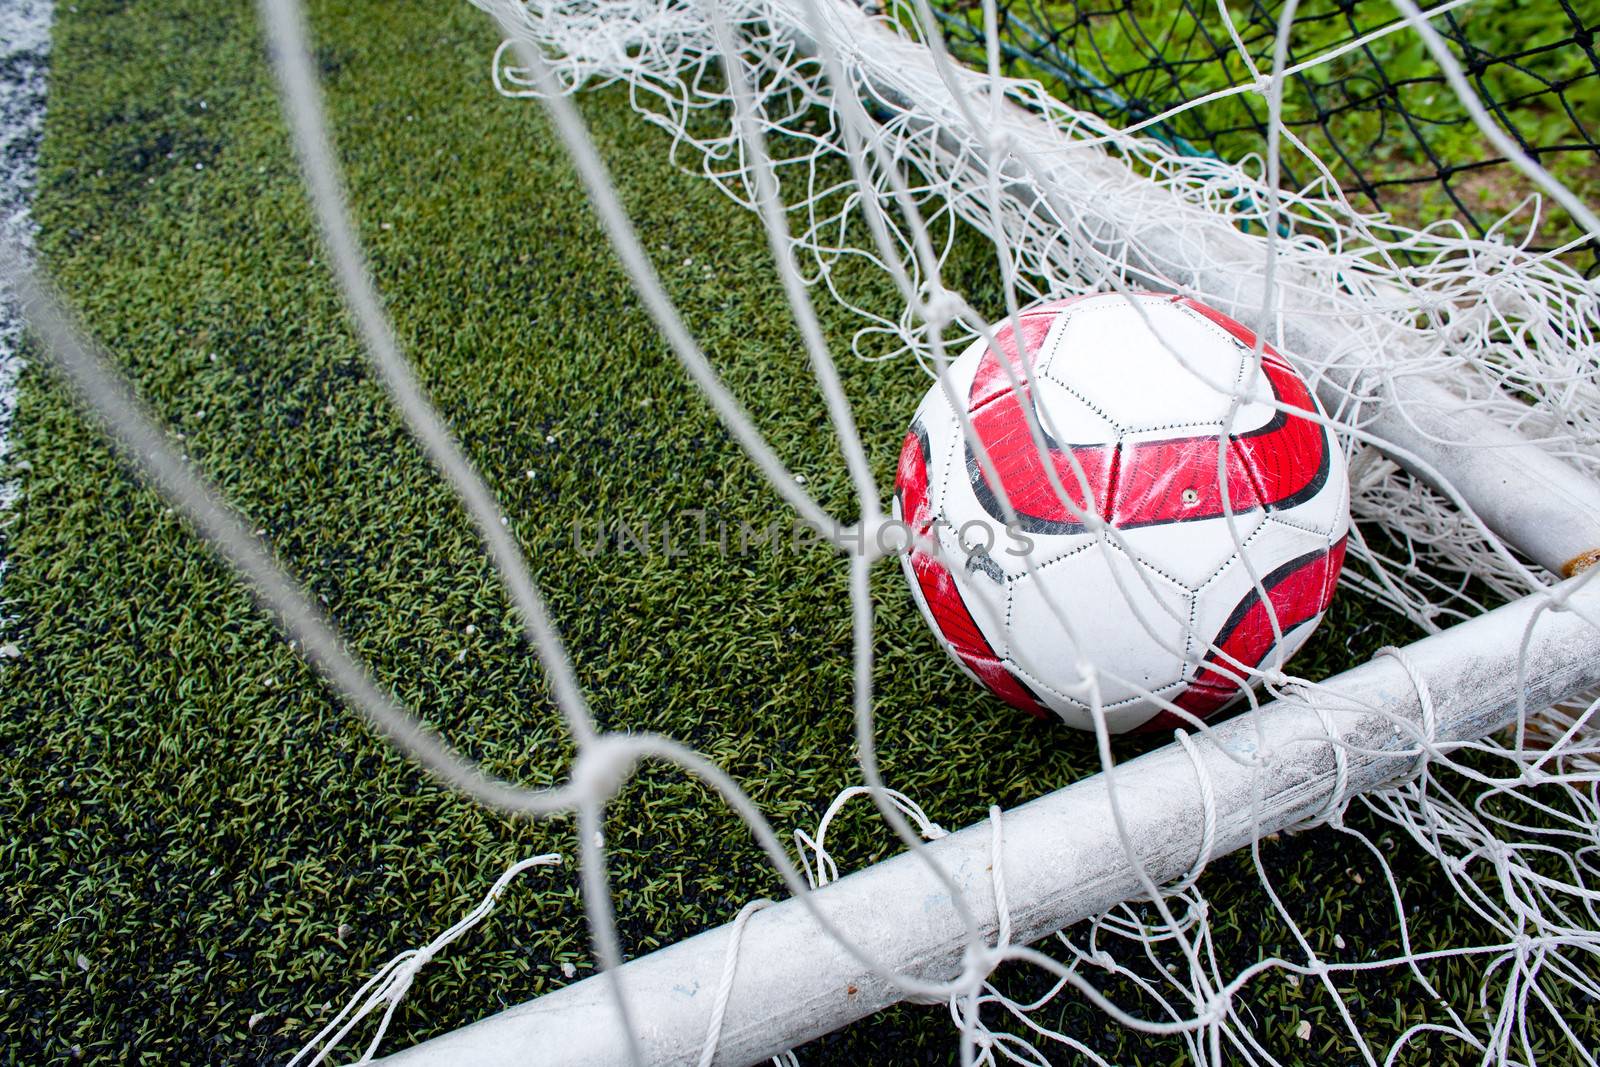 Football in the goal net by 2nix